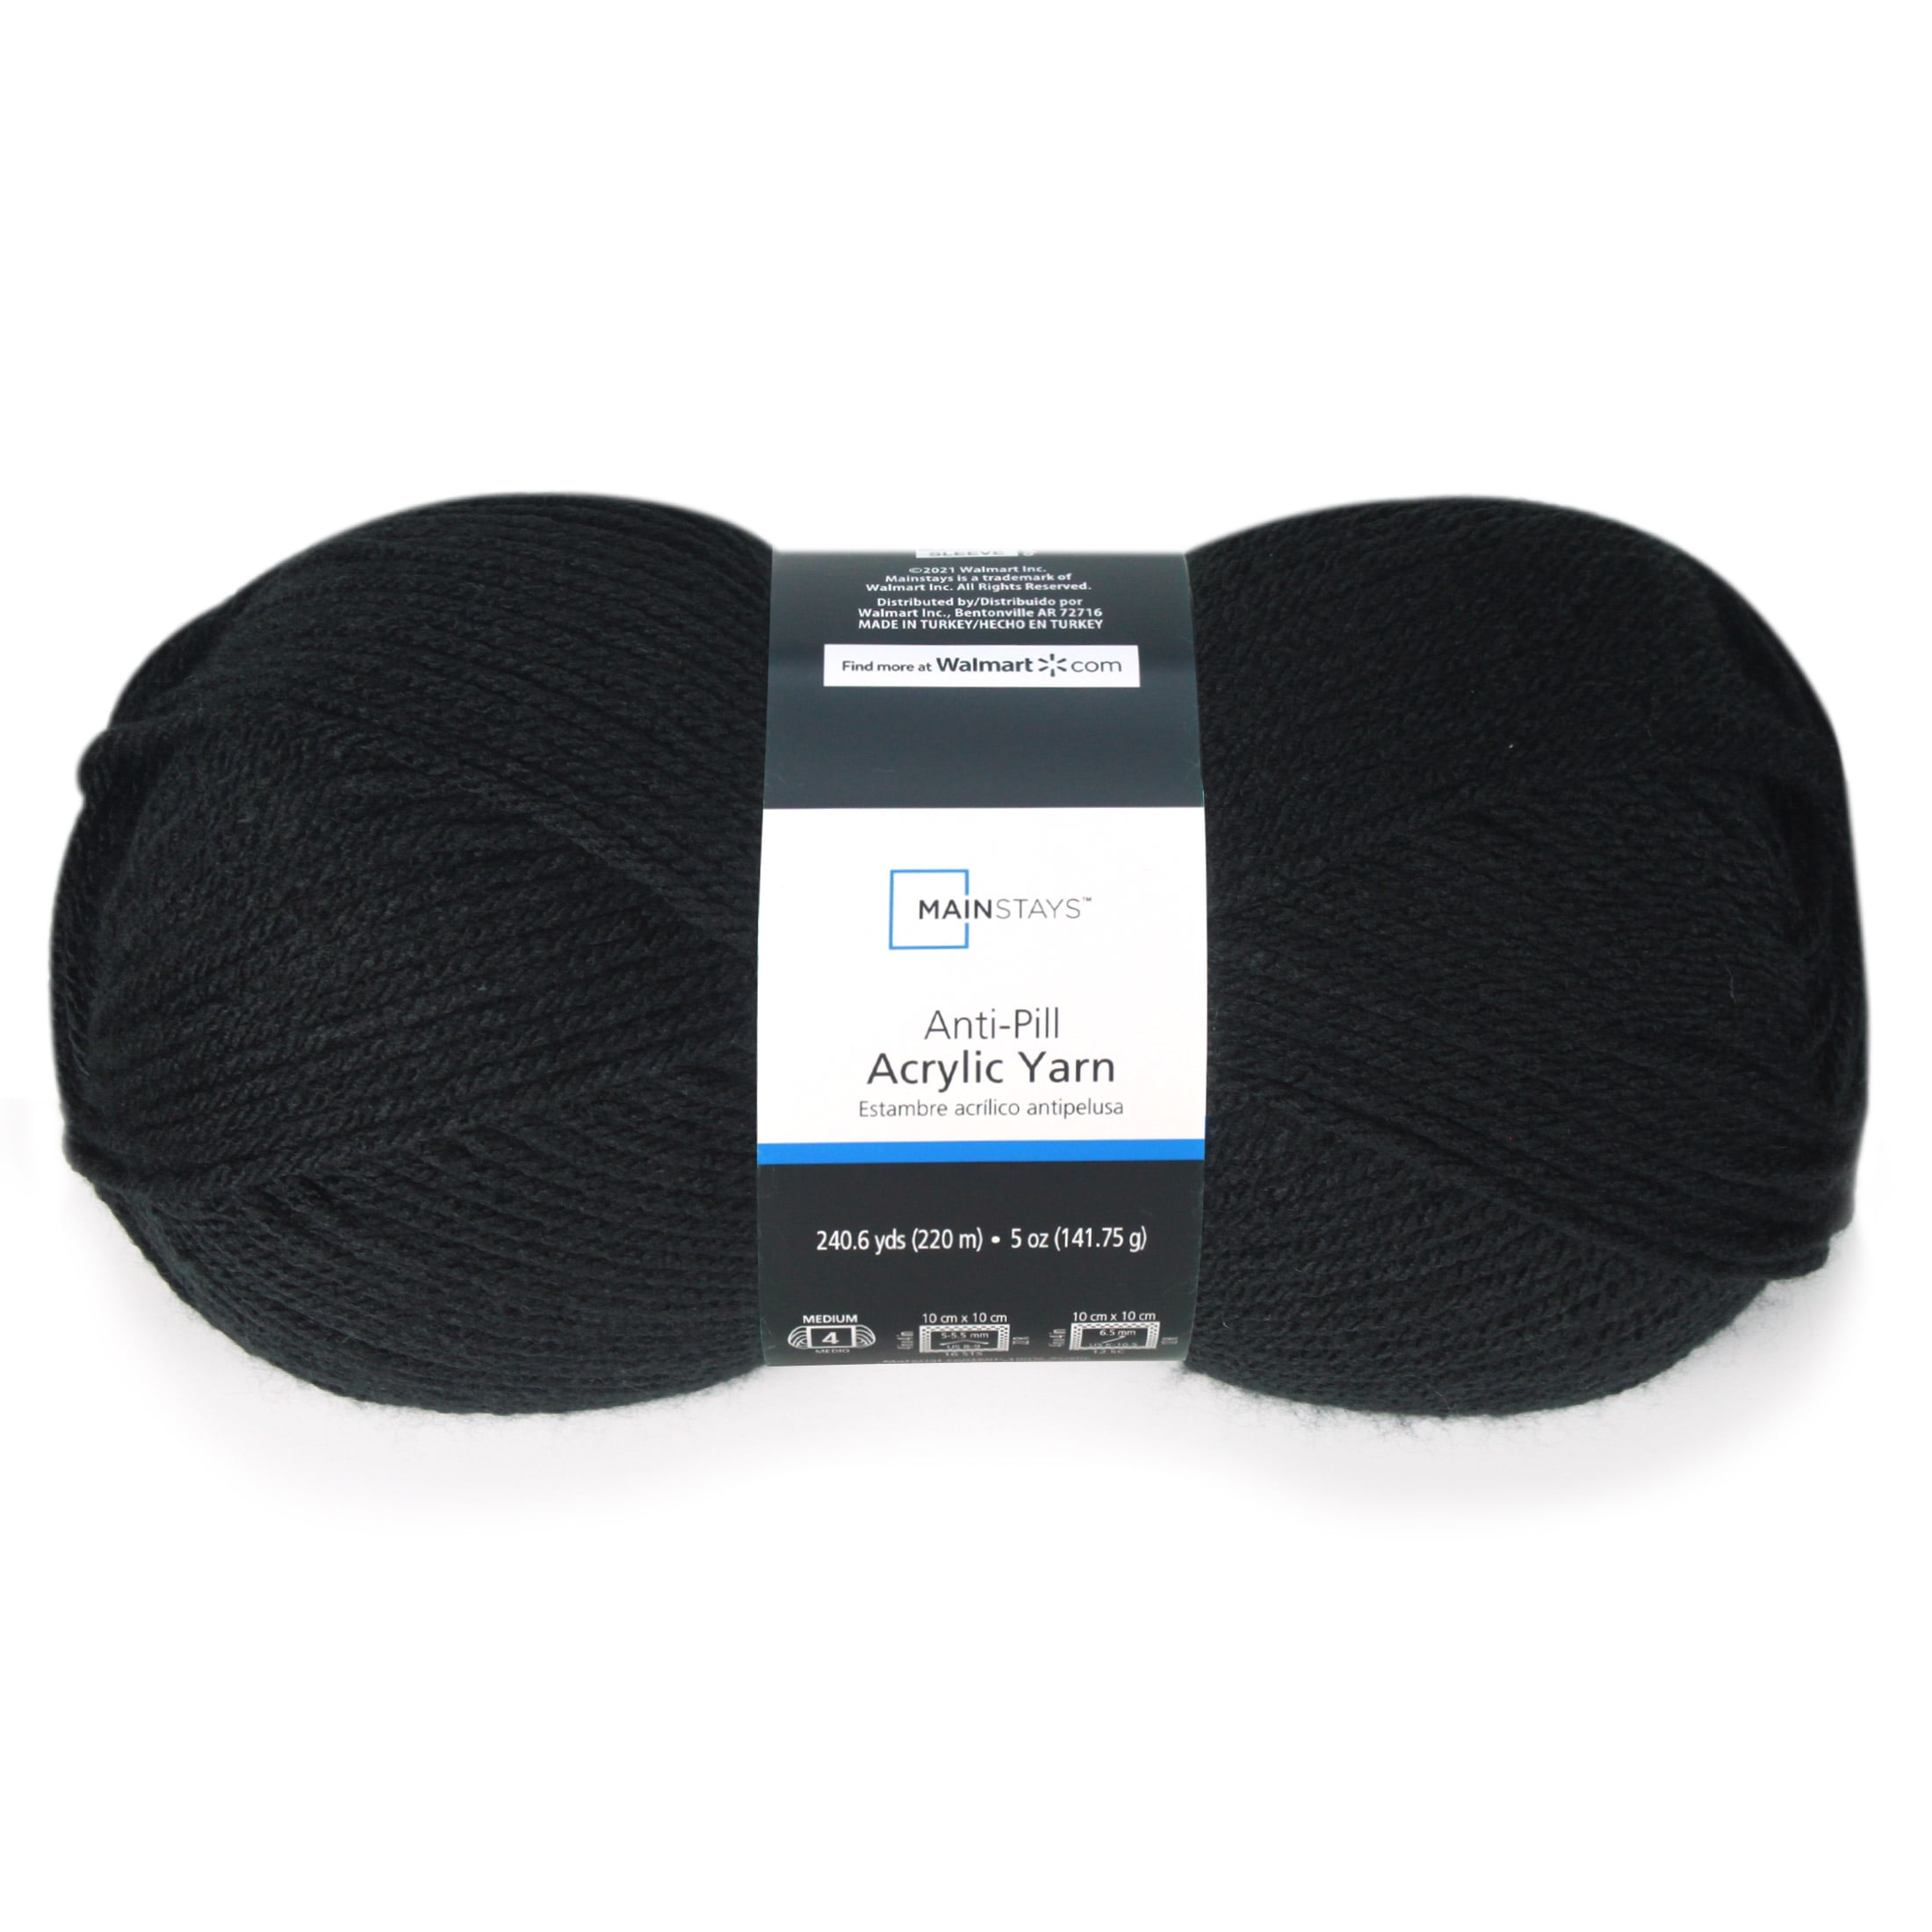 Fantasia Acrylic Yarn, L: 35 m, Maxi , Black, 50 G, 1 Ball